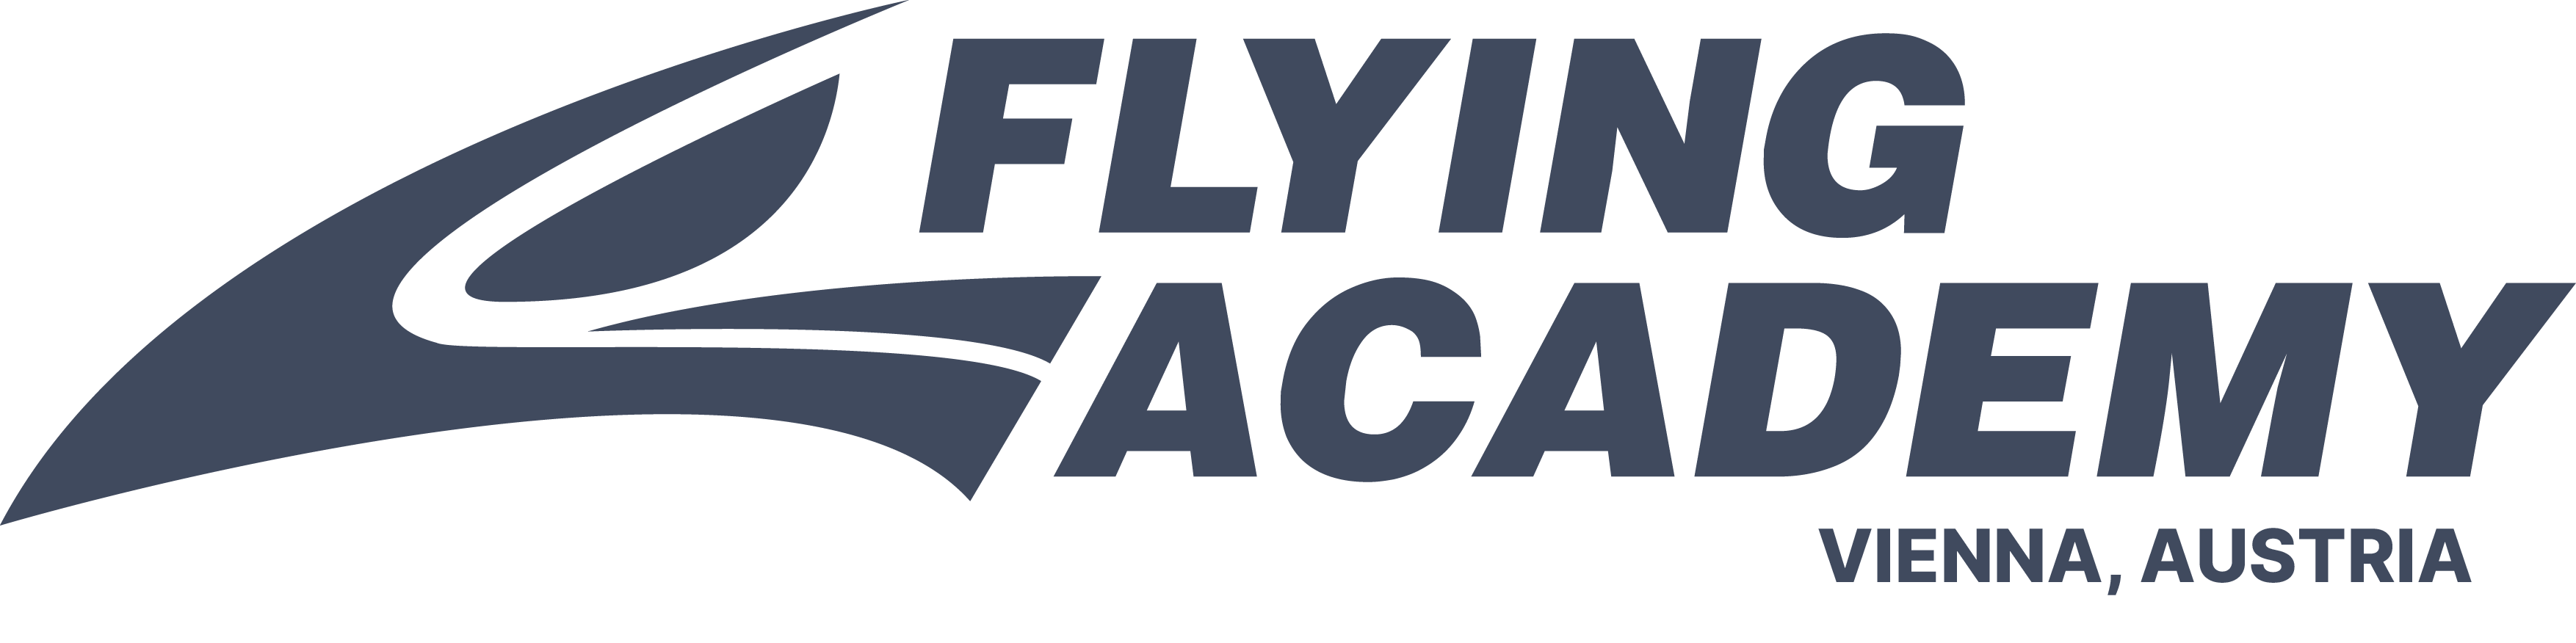 Flying Academy Vienna | Professional Pilot Training